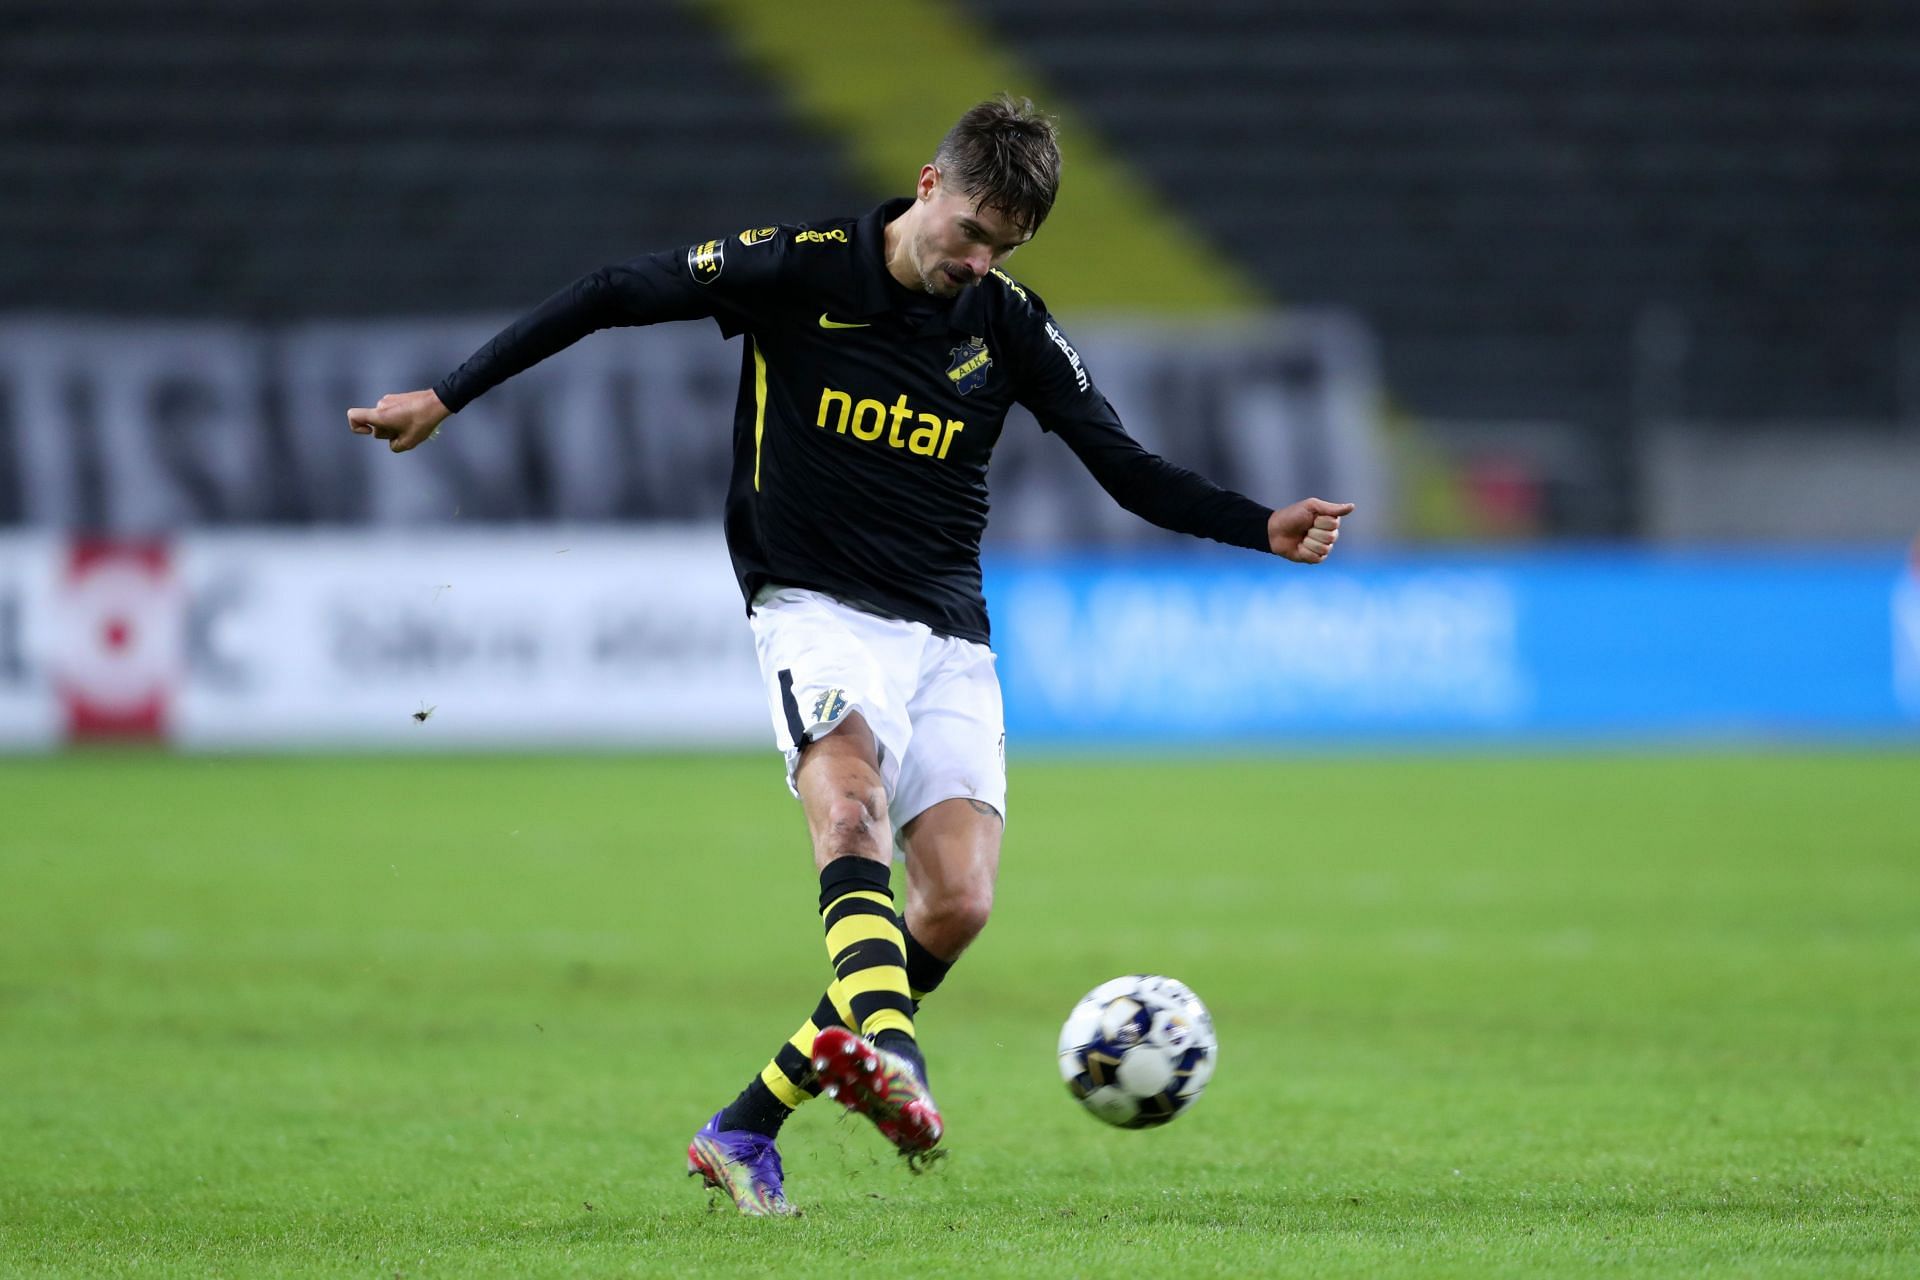 AIK play host to Kalmar on Sunday